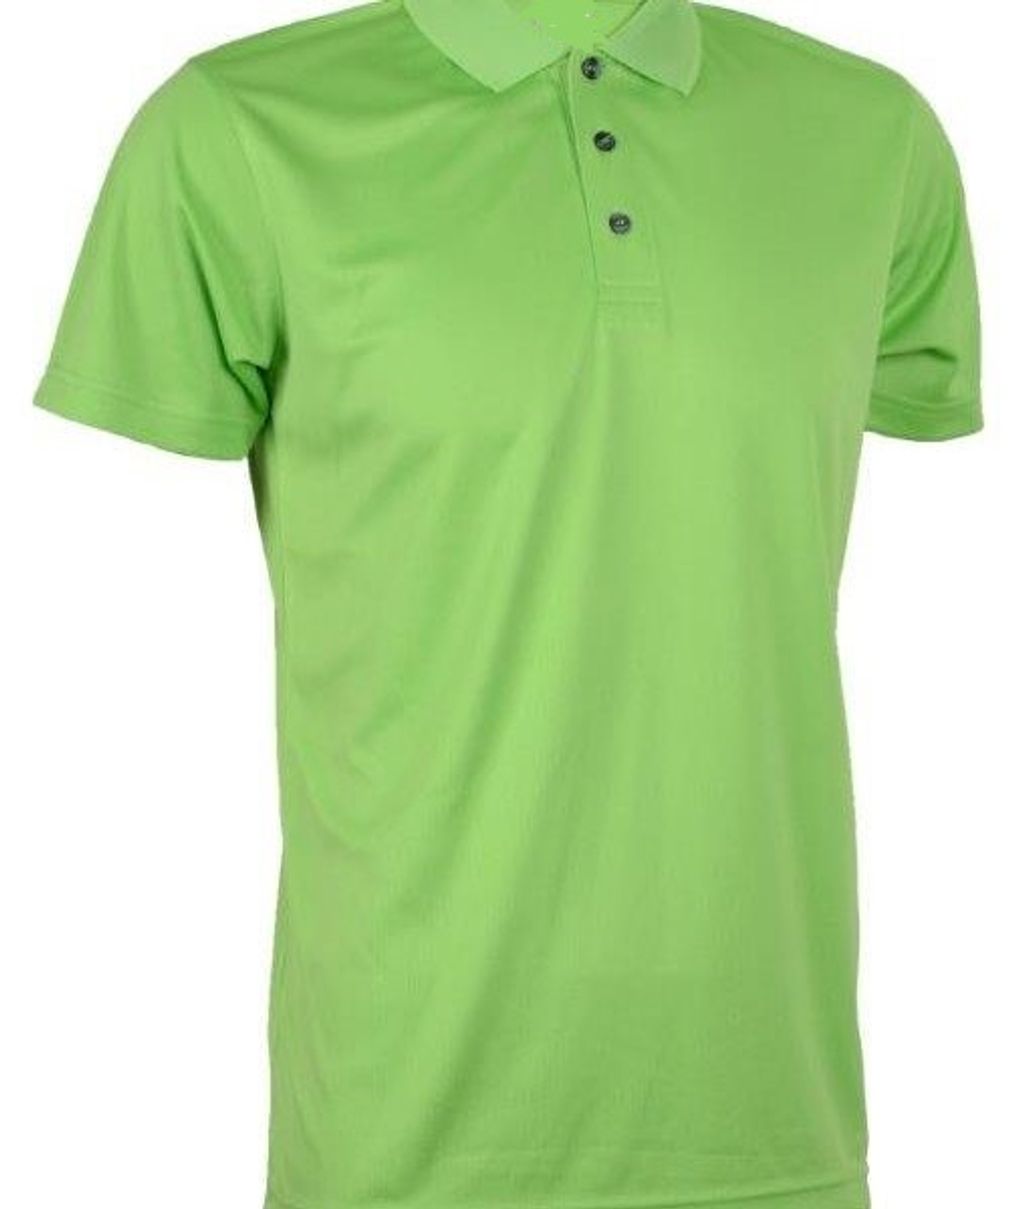 Outrefit Microfiber Collar Polo Shirt Apple Green.jpg